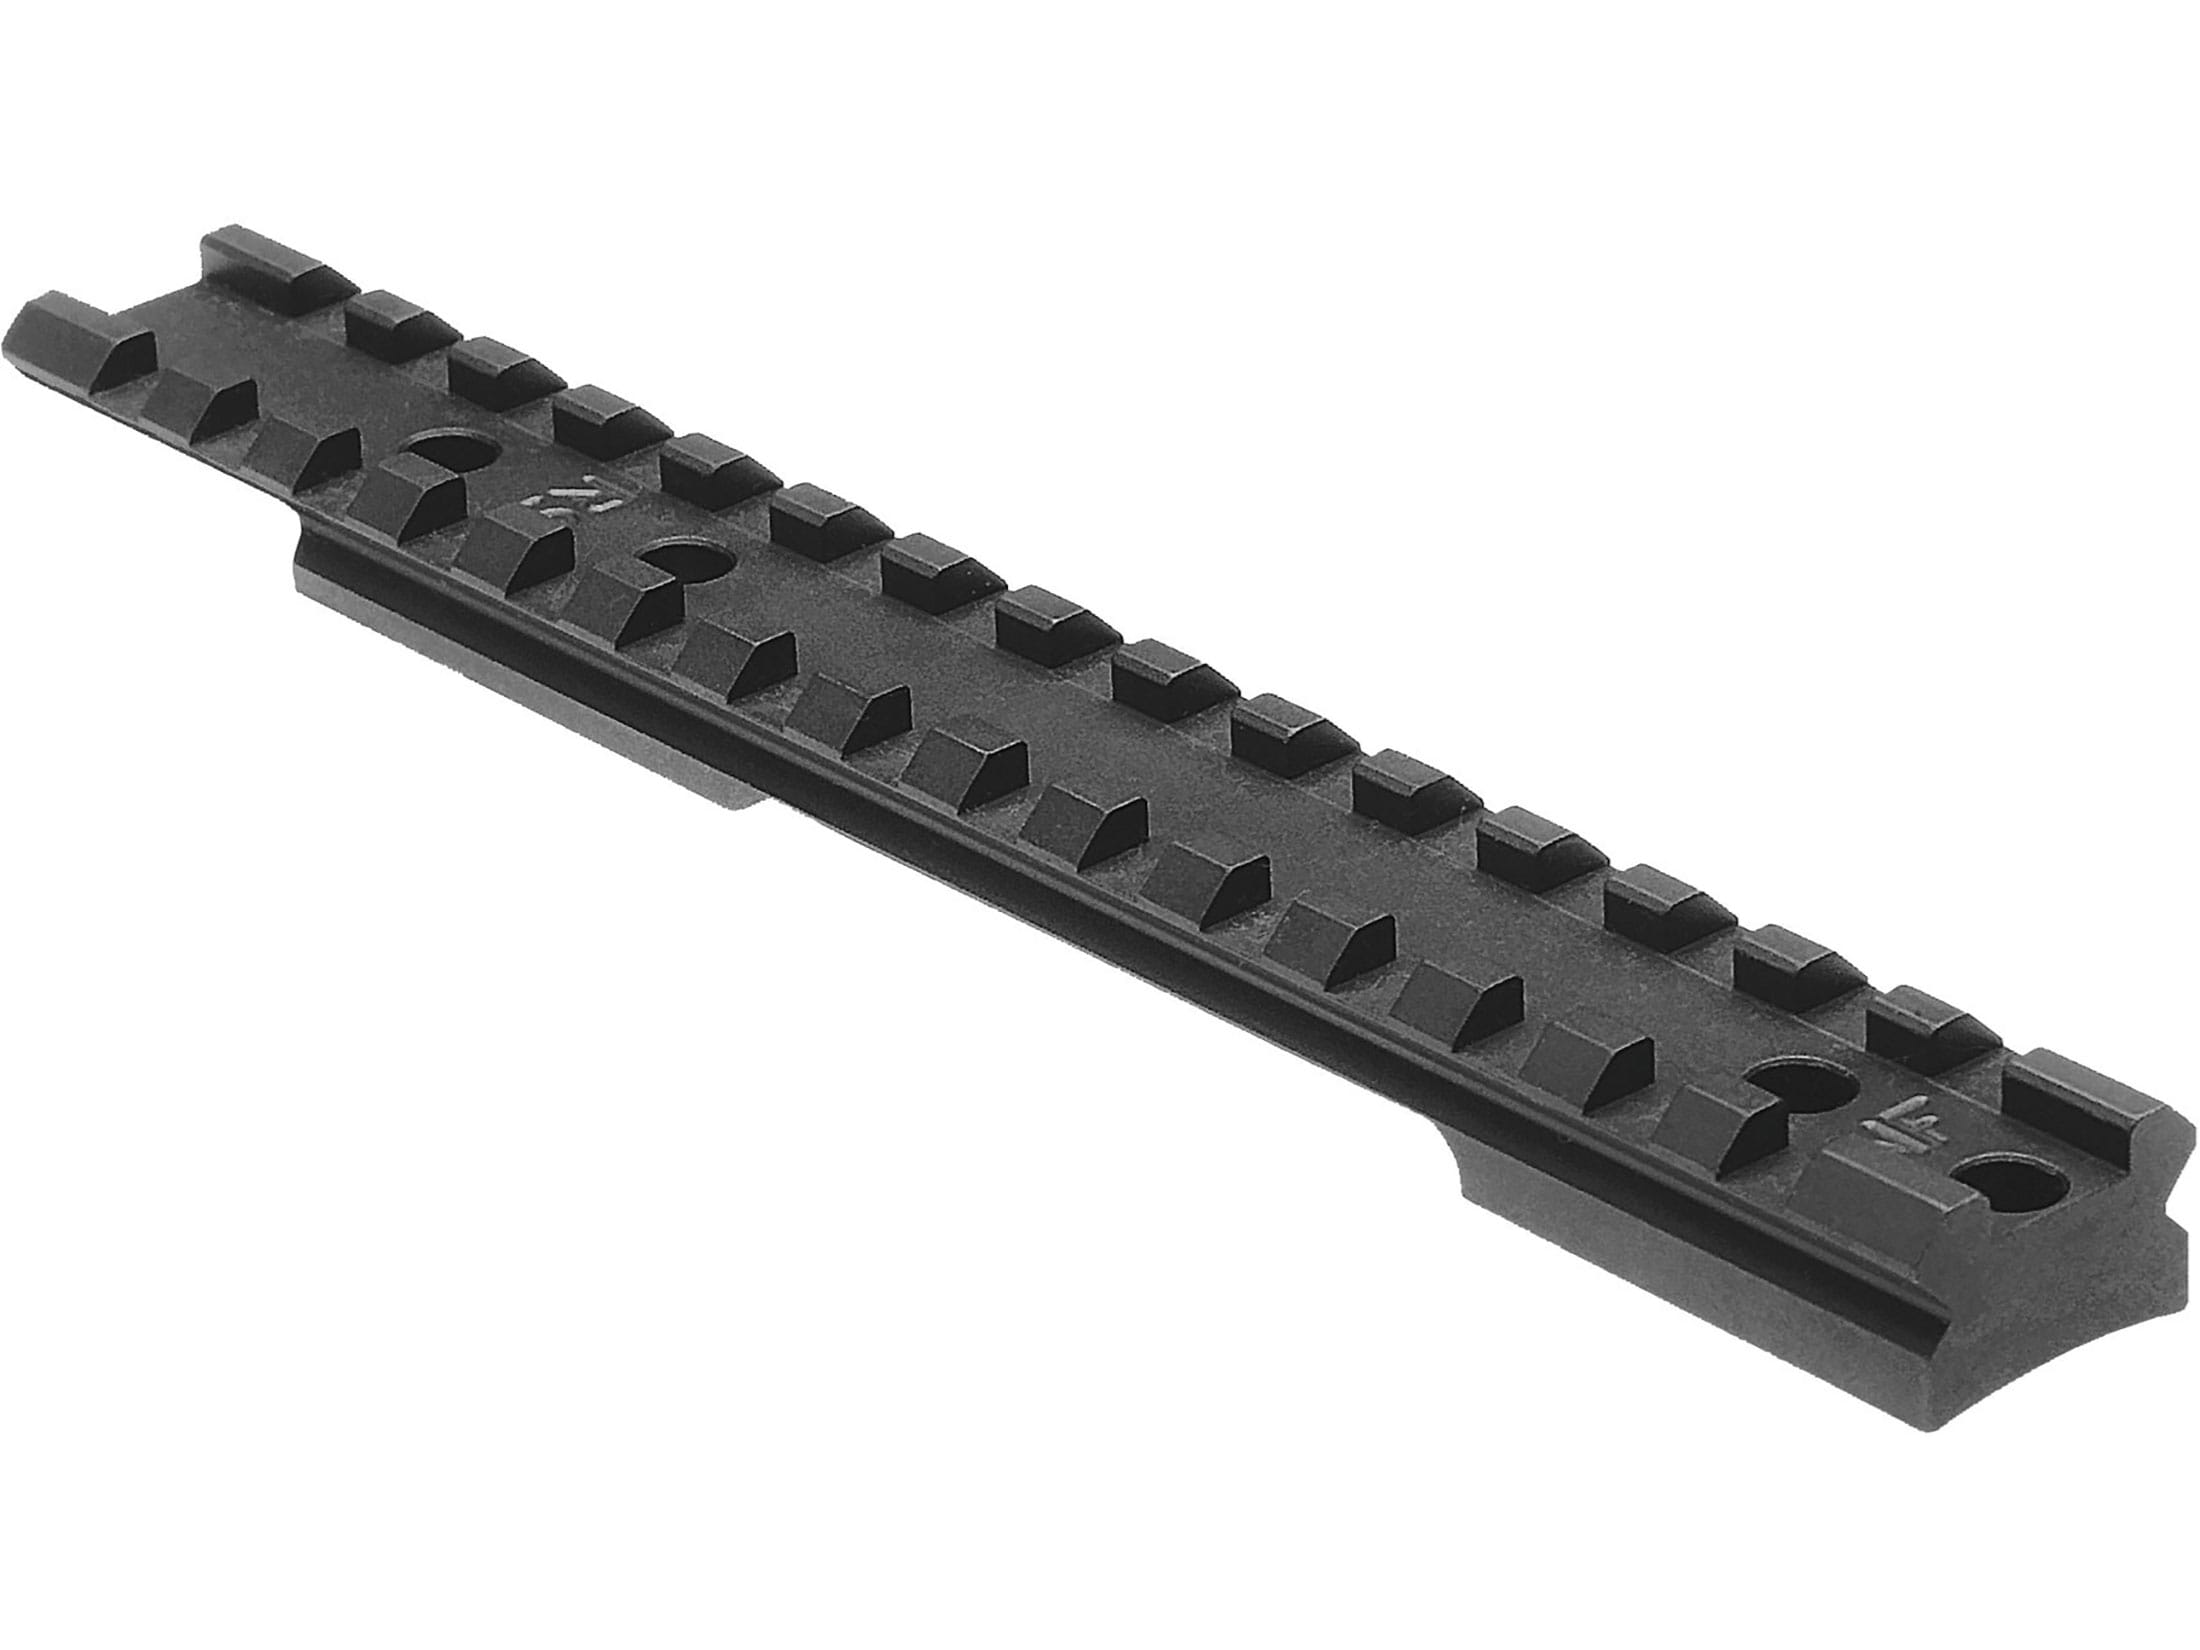 Remington Model 700 Picatinny Rail with 8-40 screws 